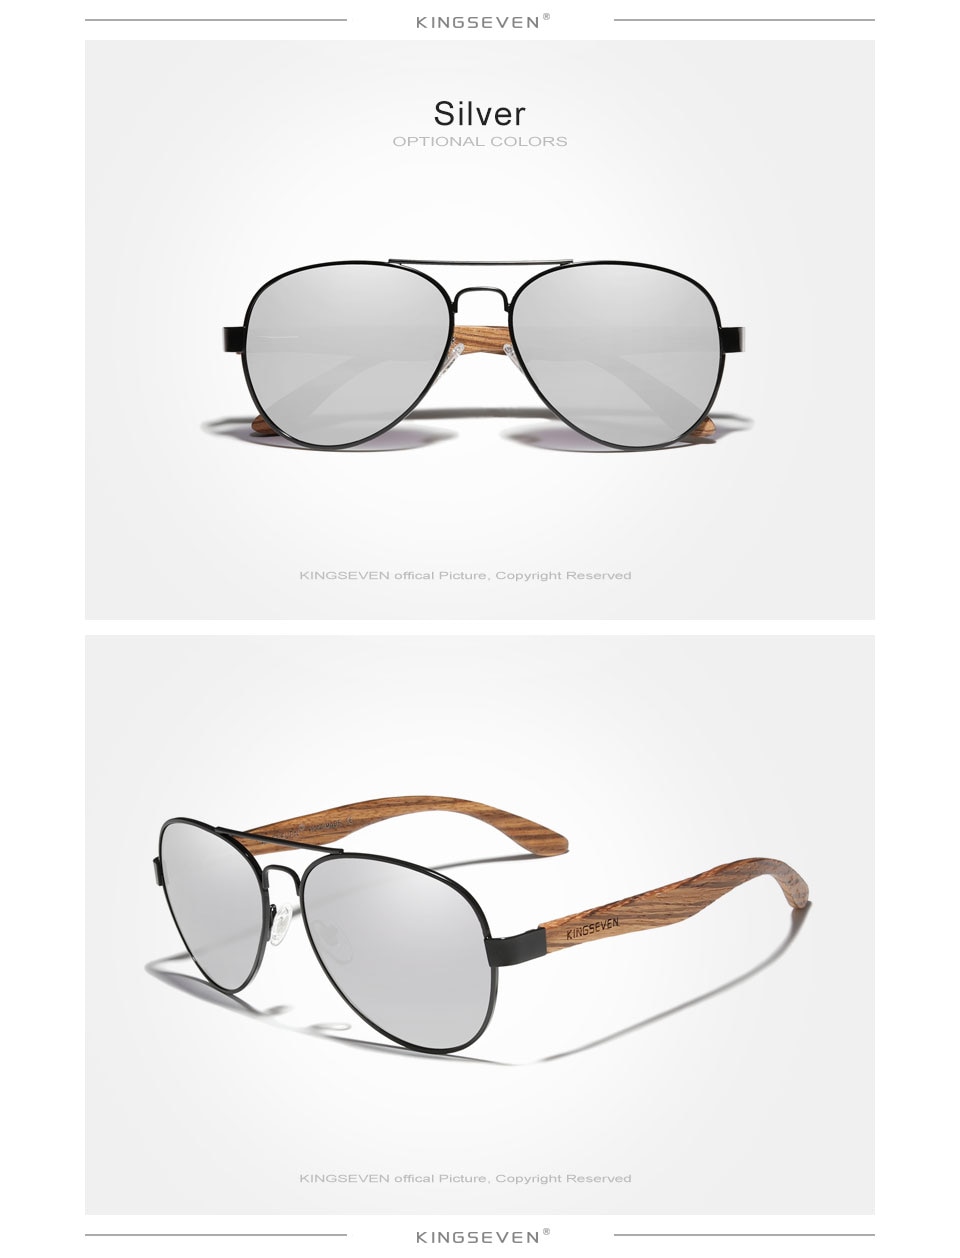 KINGSEVEN 2021 New Handmade Wood Sunglasses Polarized Men's Glasses UV400 Protection Mirror Eyewear Wooden Temples Oculos Z5518